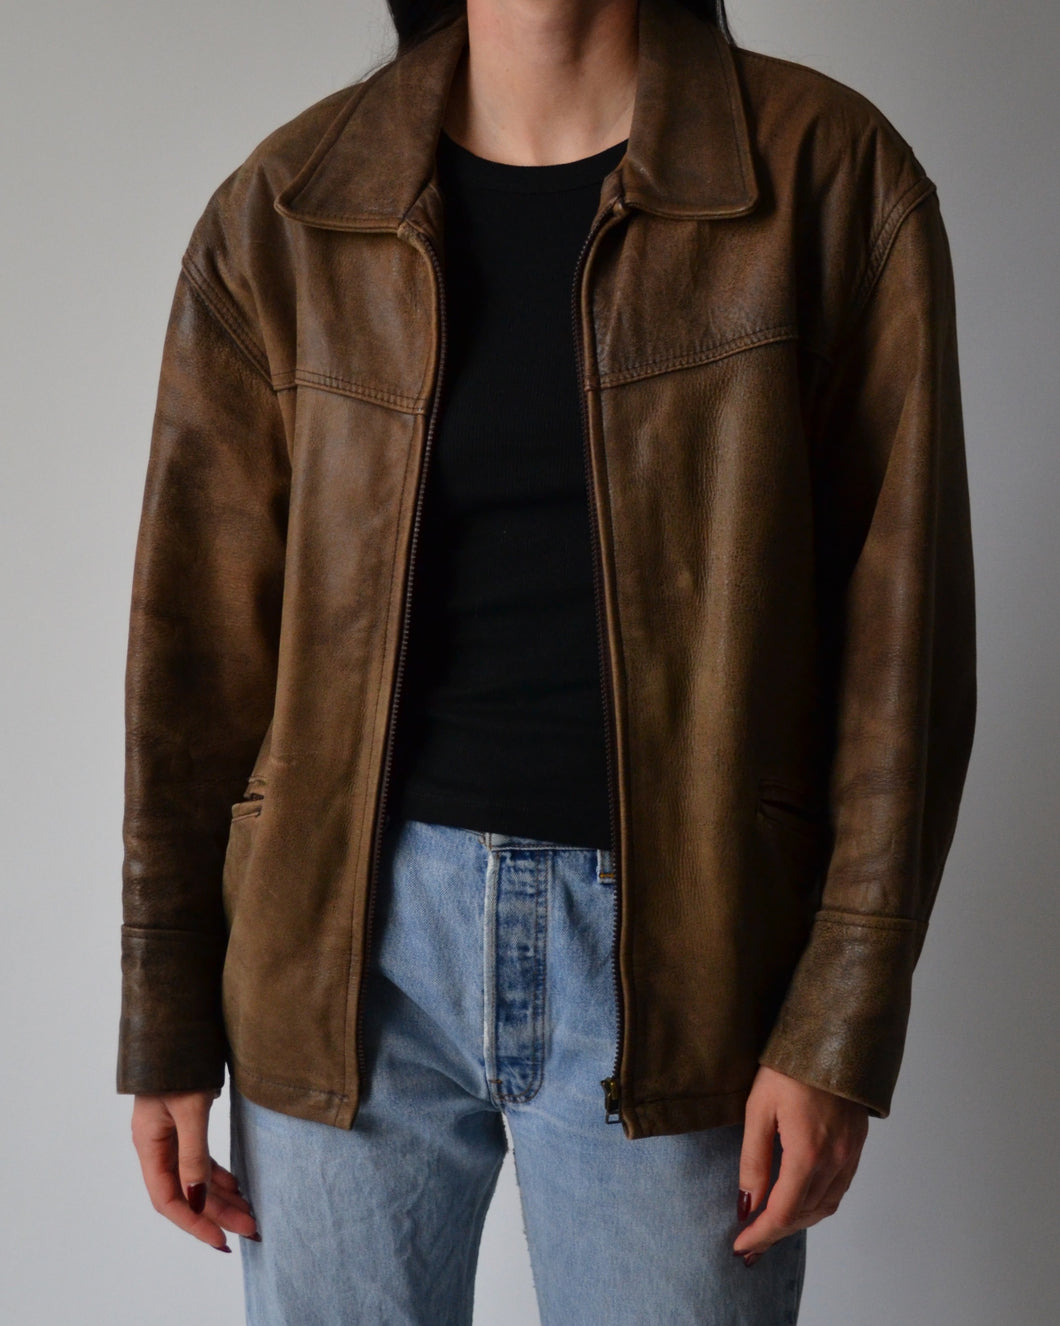 Brown Distressed Leather Jacket